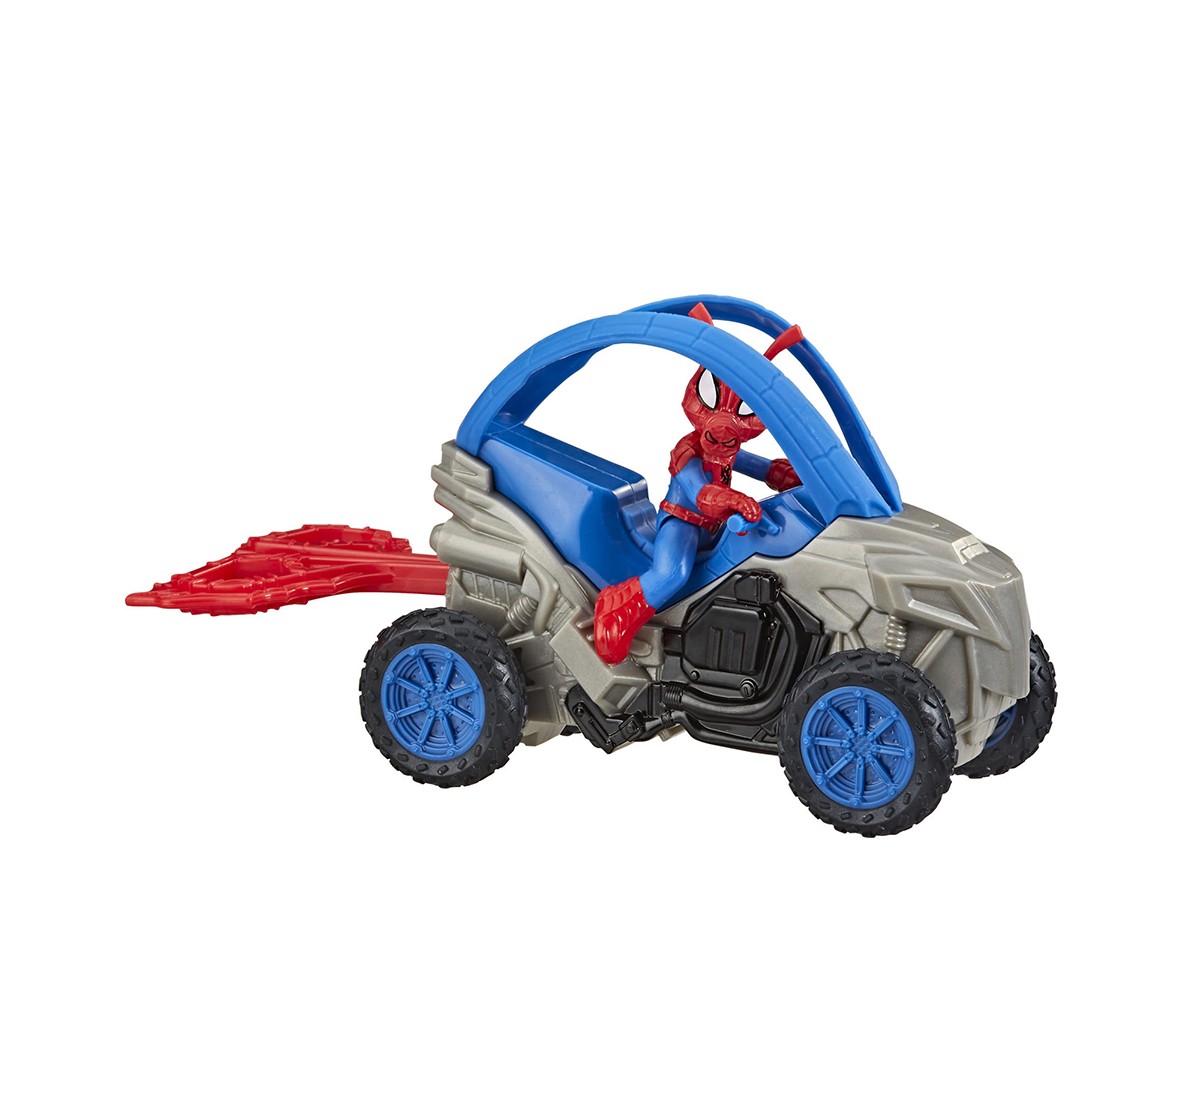 Marvel Spider-Man Vehicle & 6"Figure Assorted Action Figures for Kids age 4Y+ 